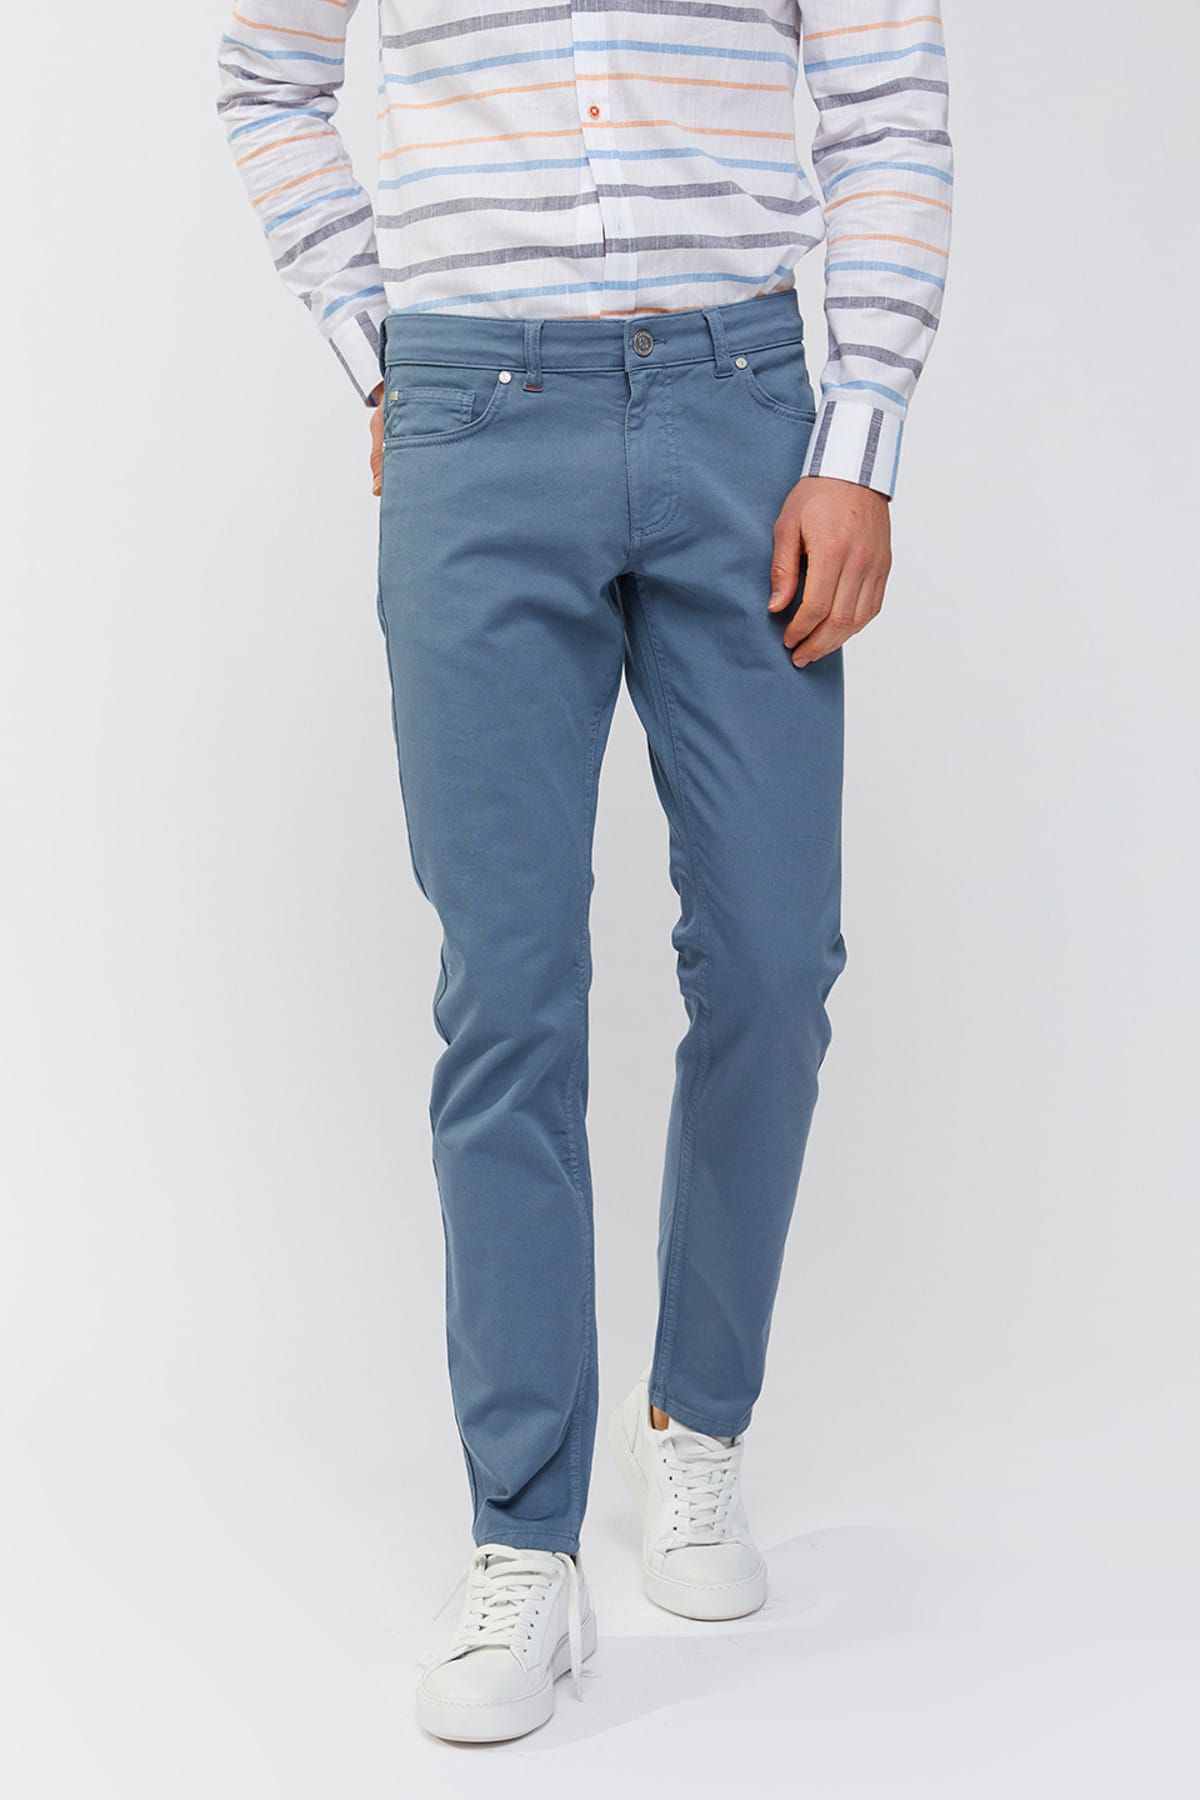 Avva Erkek Açık Mavi 5 Cepli Düz Slim Fit Pantolon A91b3500